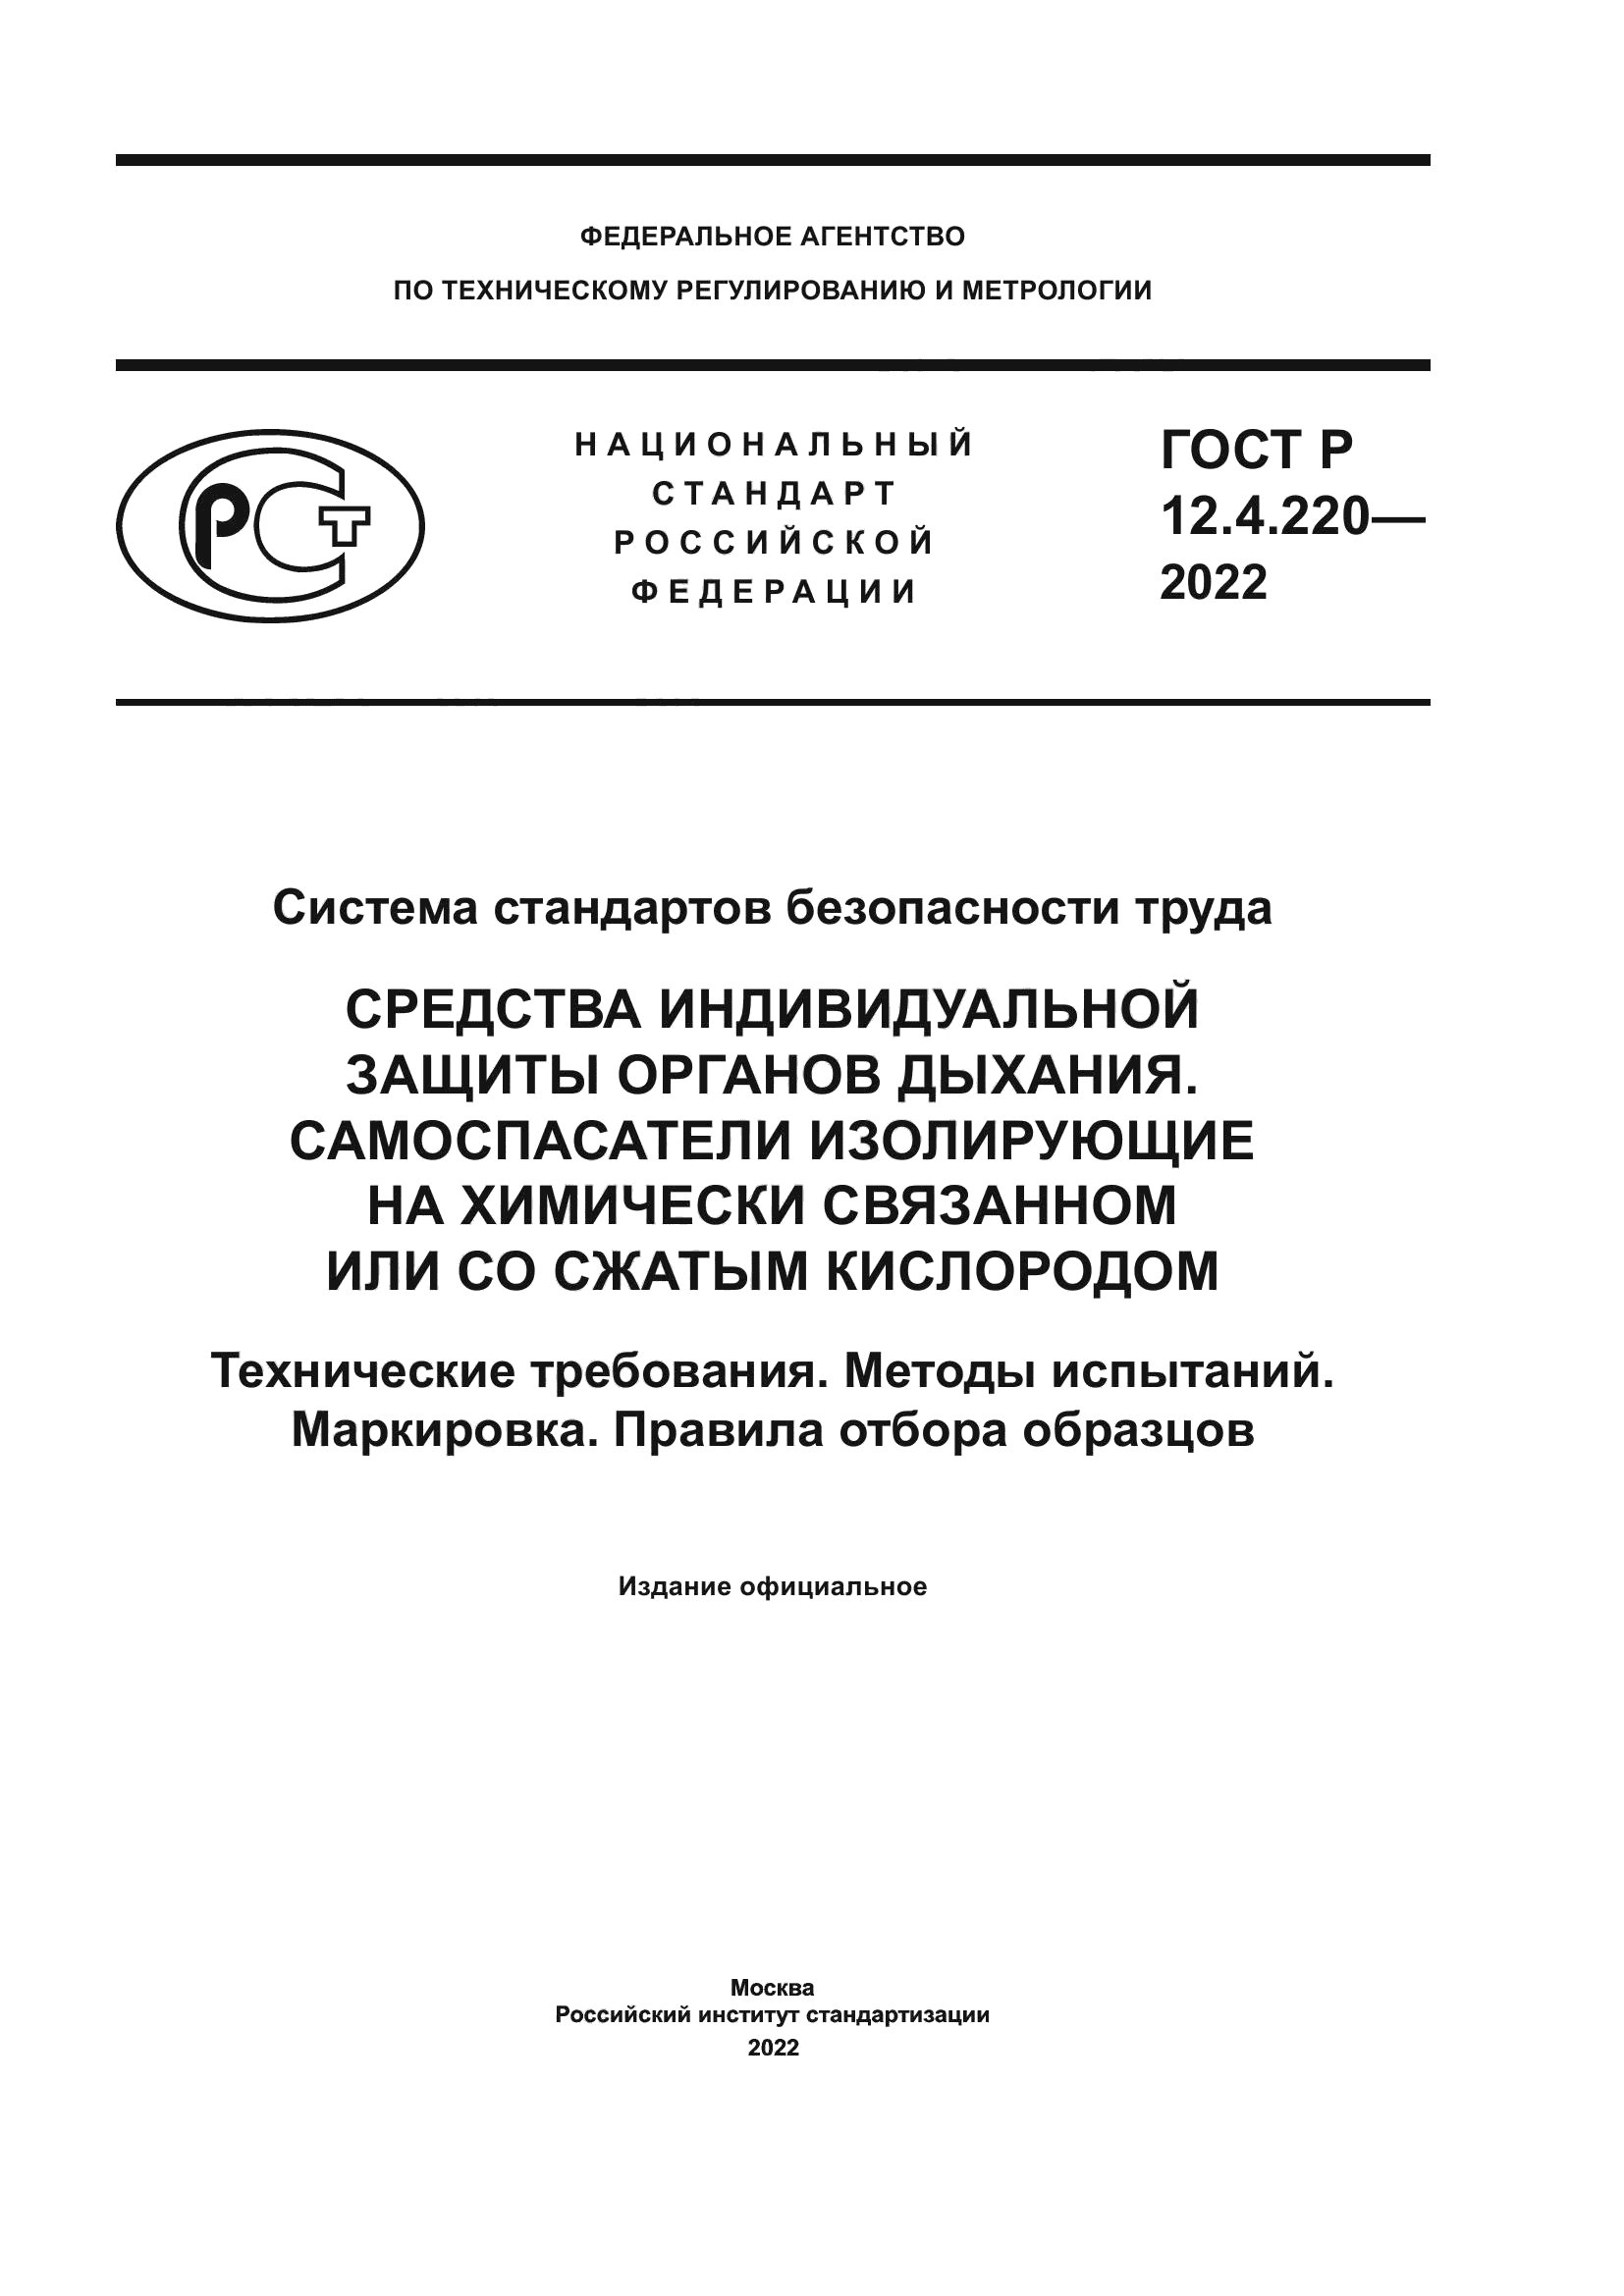 ГОСТ Р 12.4.220-2022